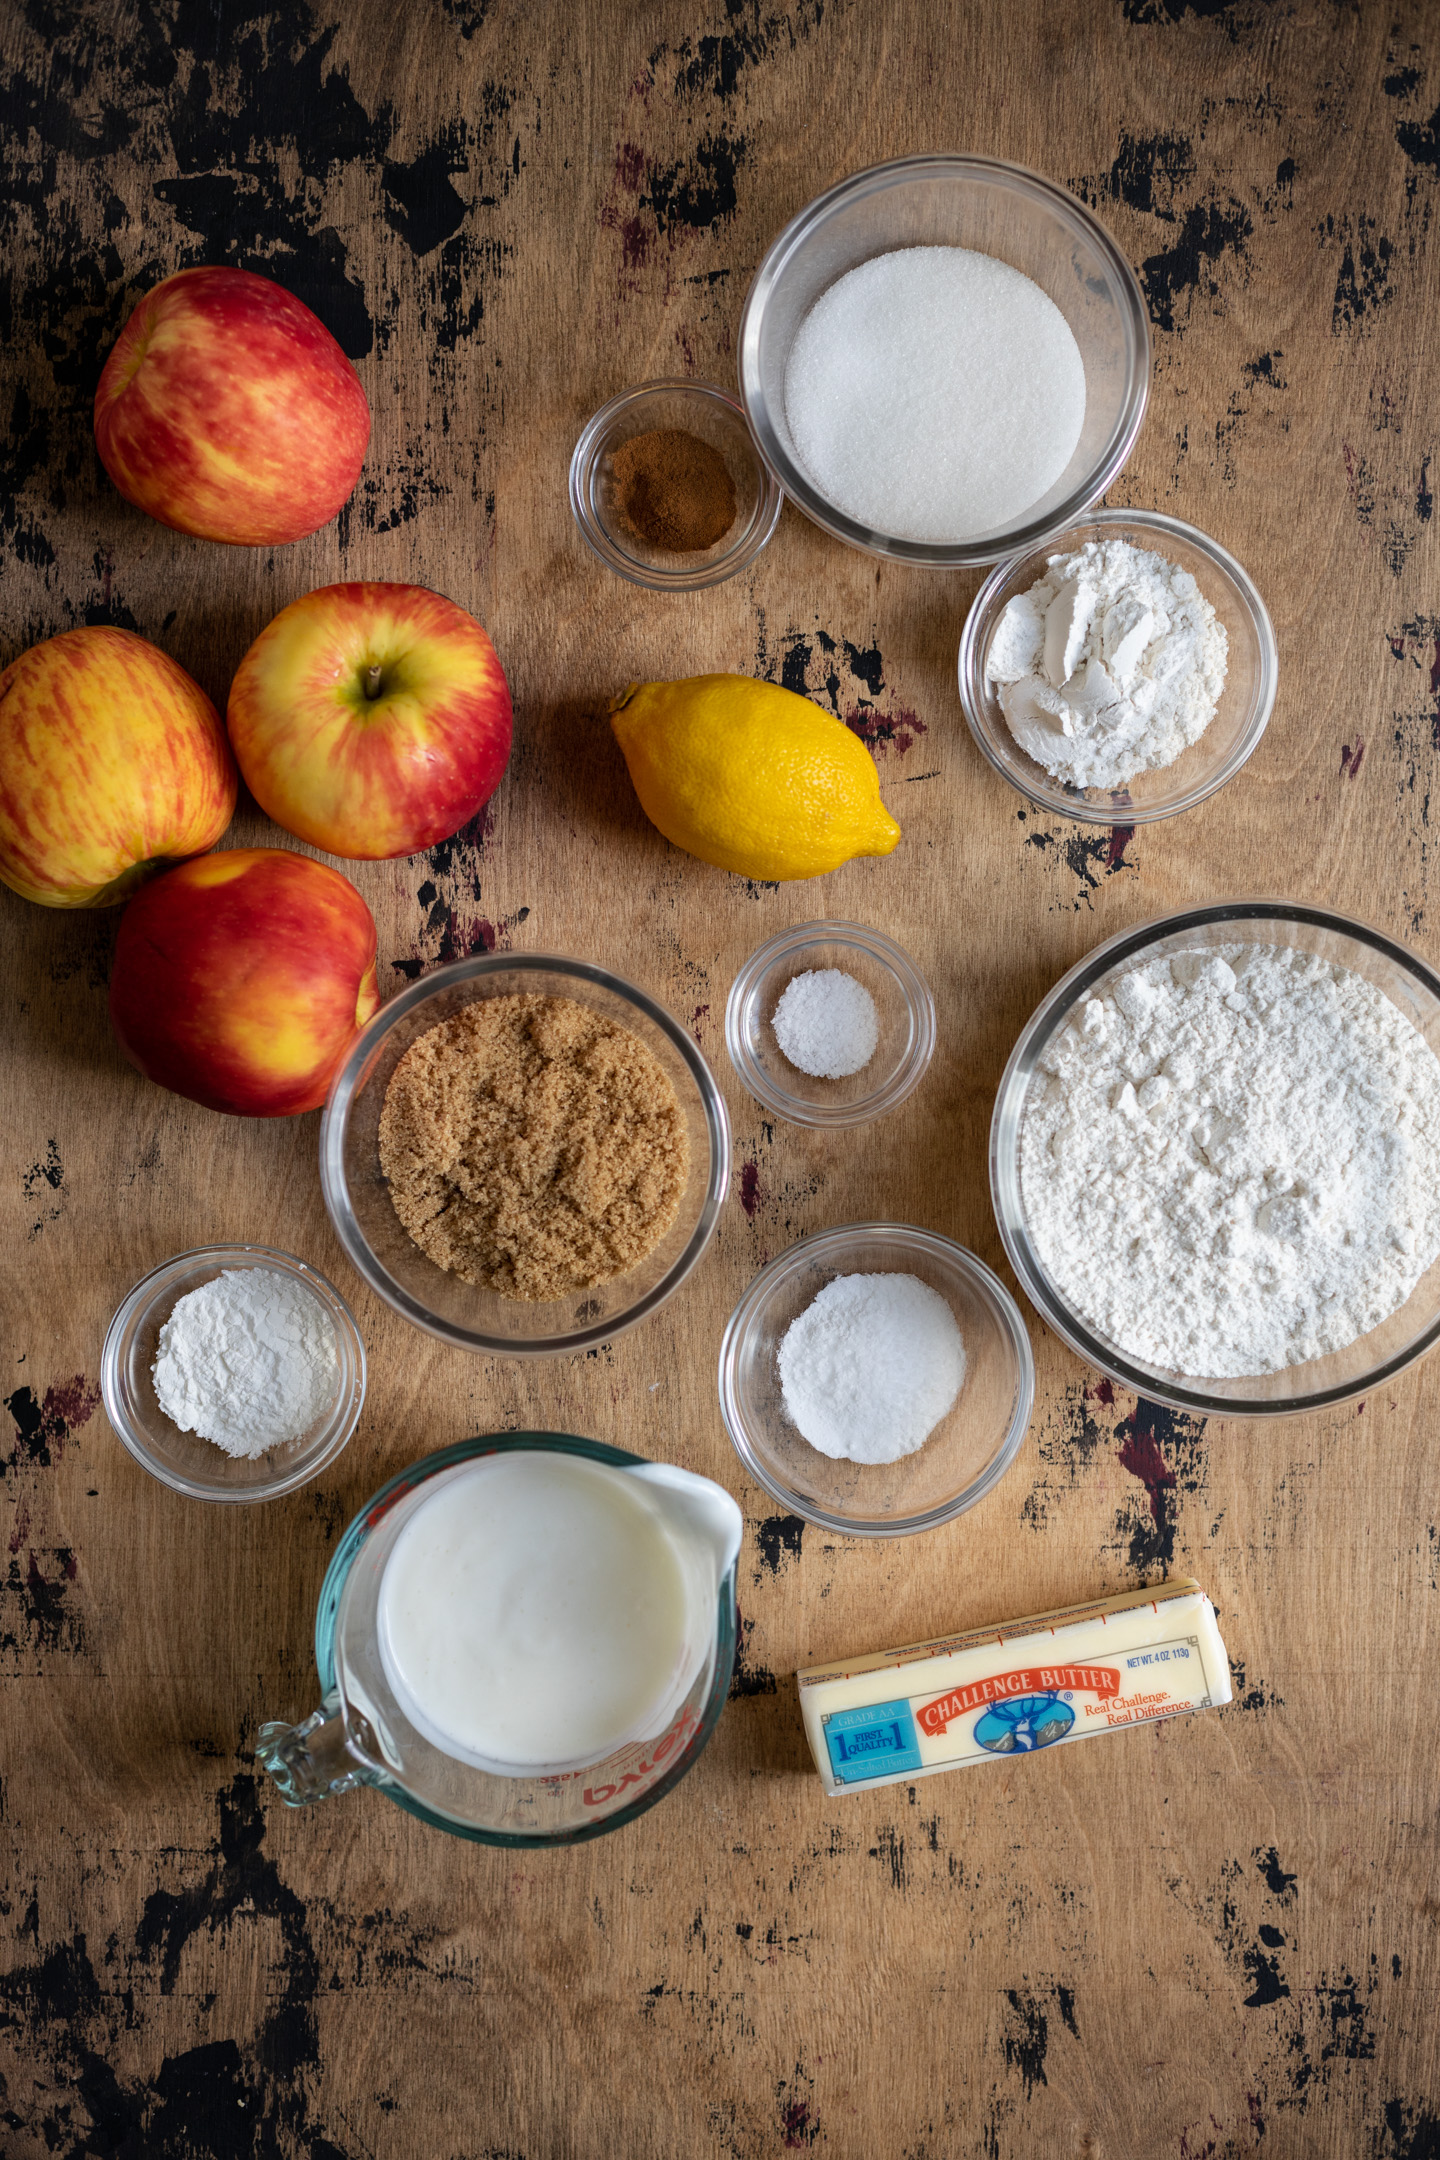 Ingredients for an apple cobbler.